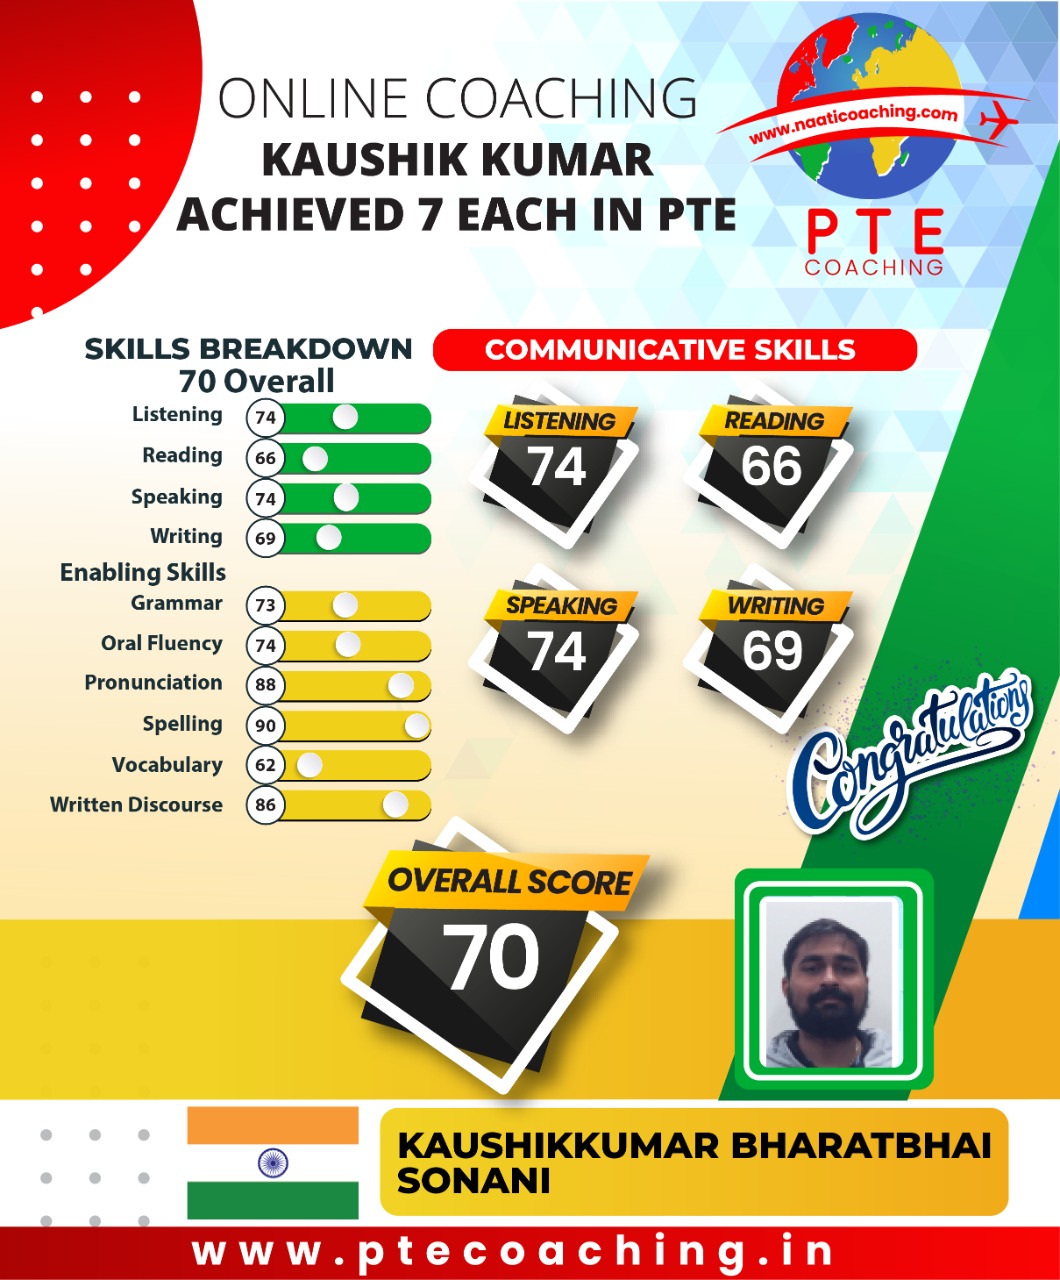 PTE Coaching Scorecard - Kaushik kumar achieved 7 each in PTE